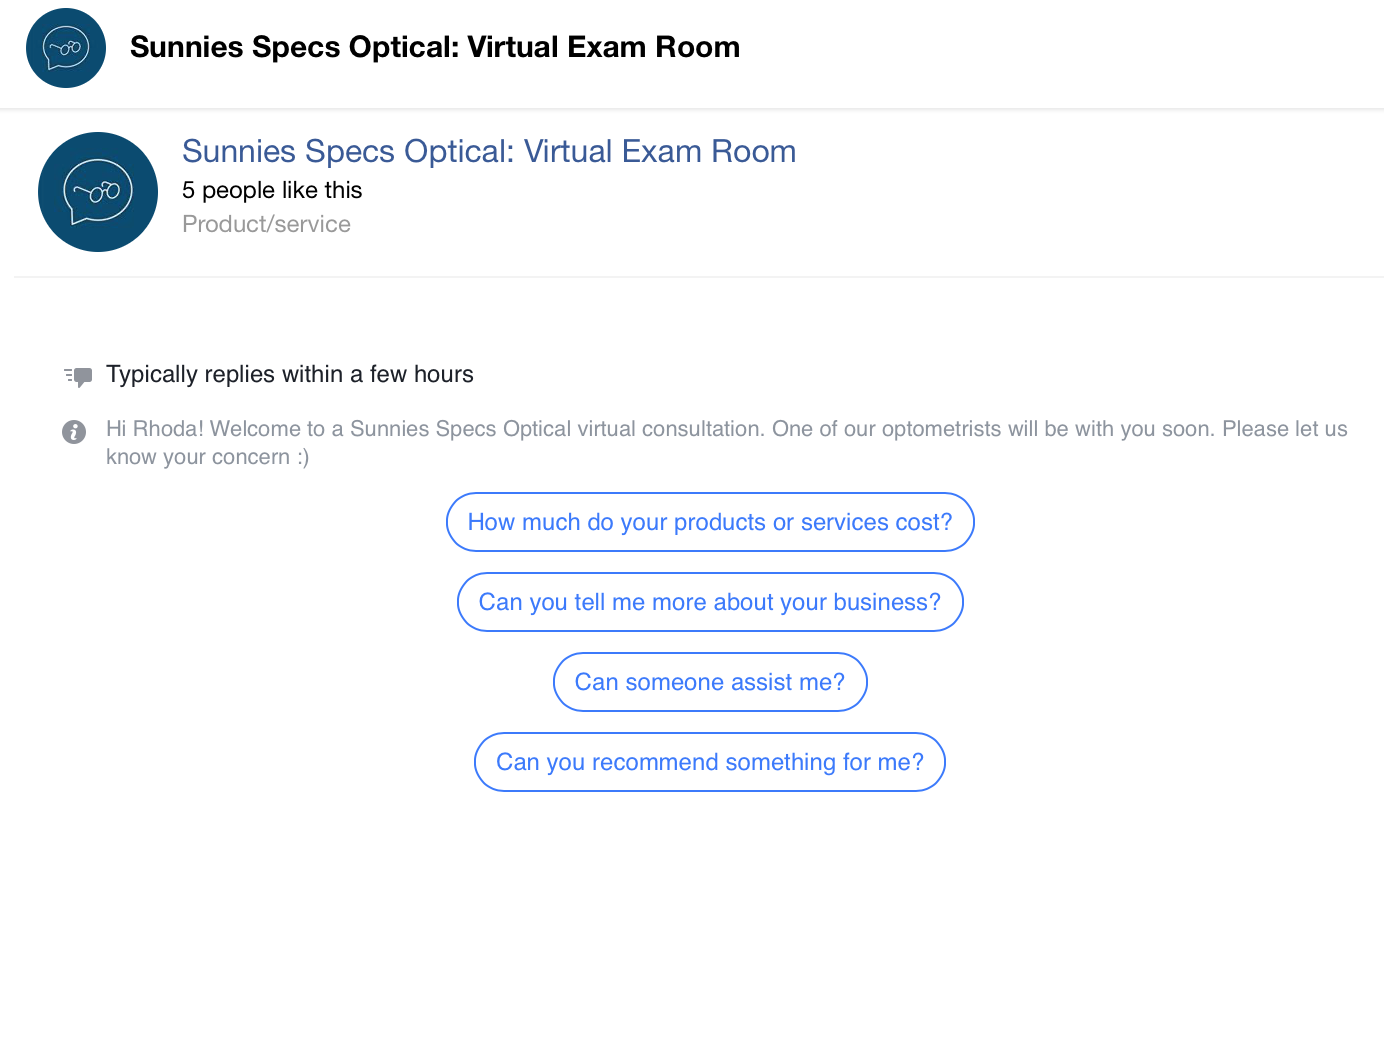 Sunnies Specs Virtual Exam Room on Facebook Messenger